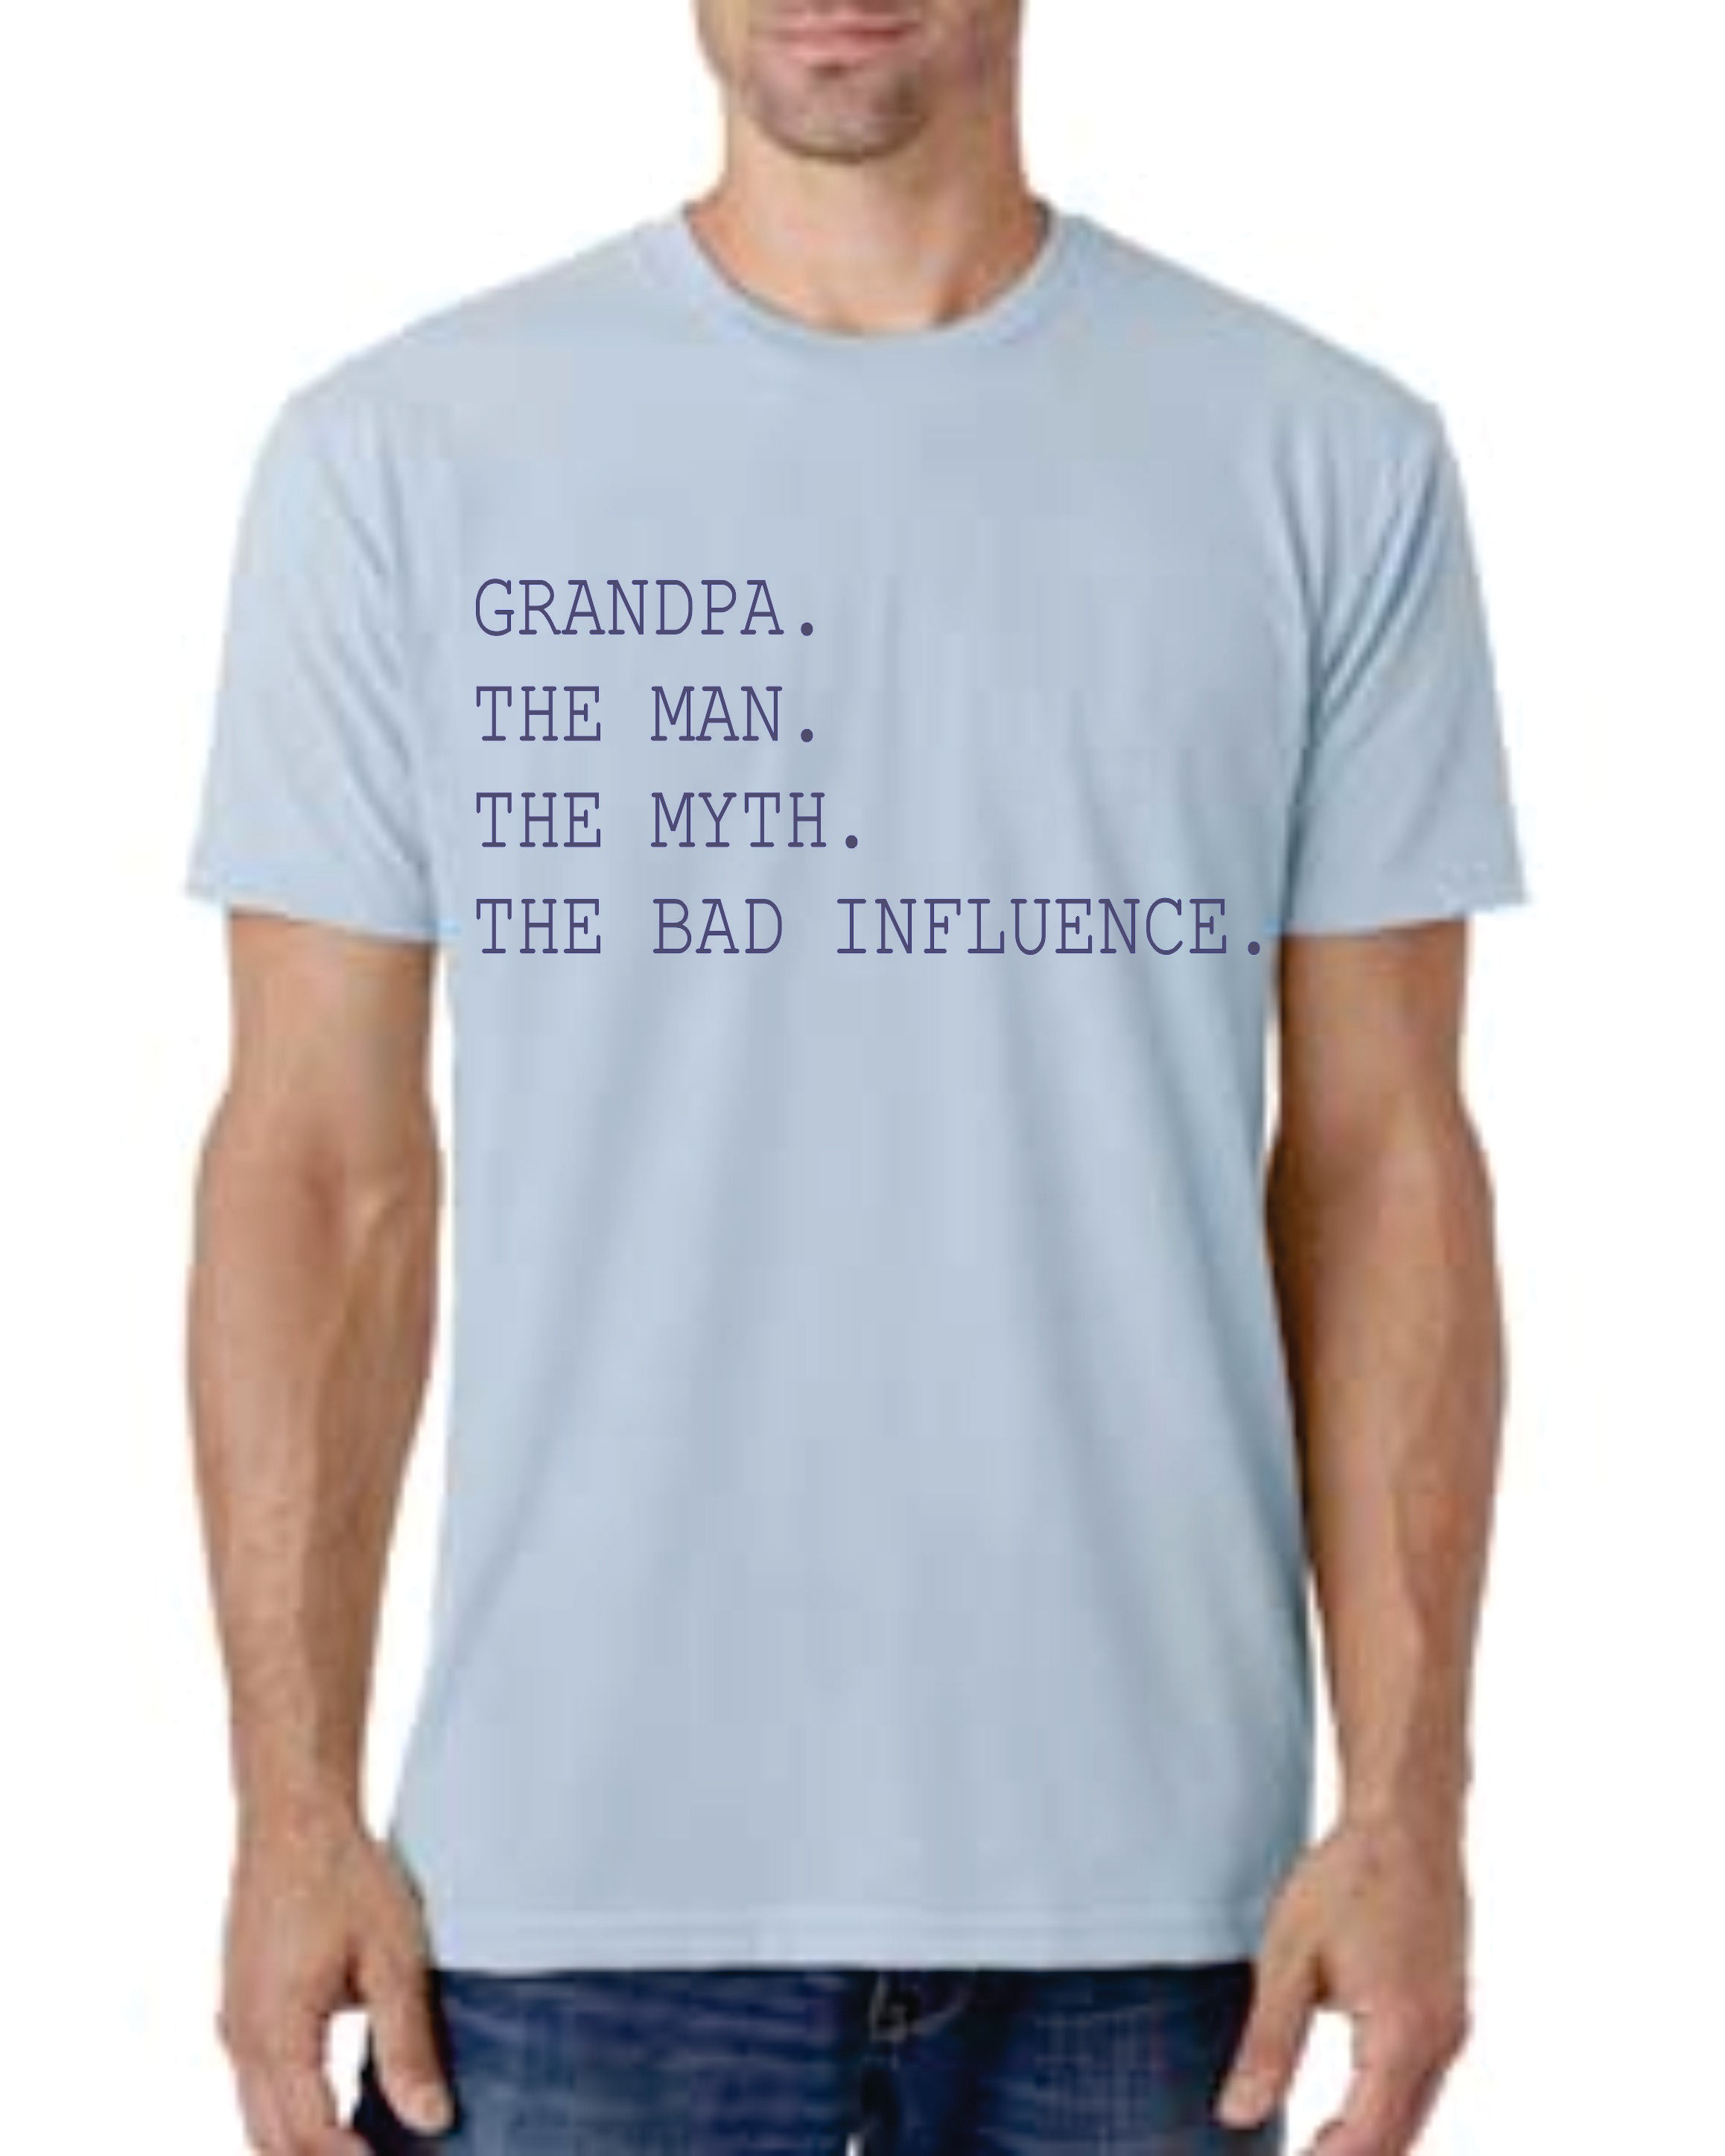 Grandpa. The Man. The Myth. The Bad Influence